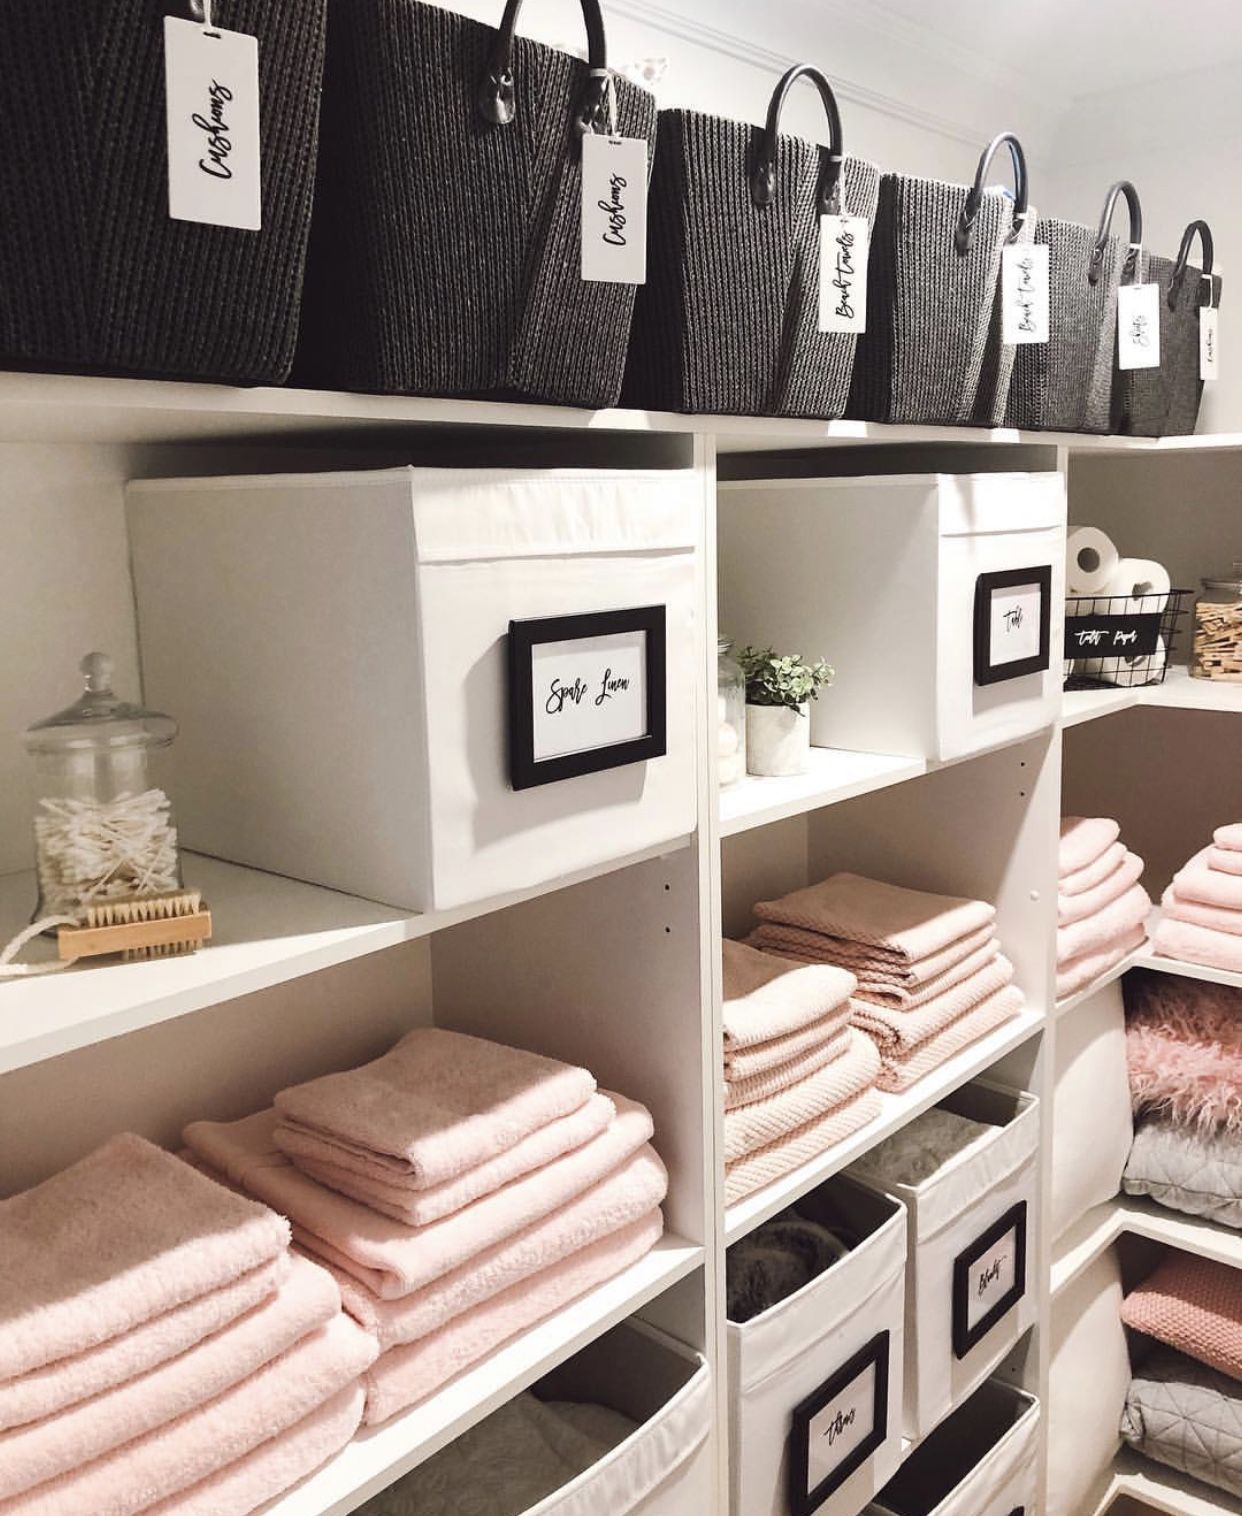 How To Organize Linen Closet